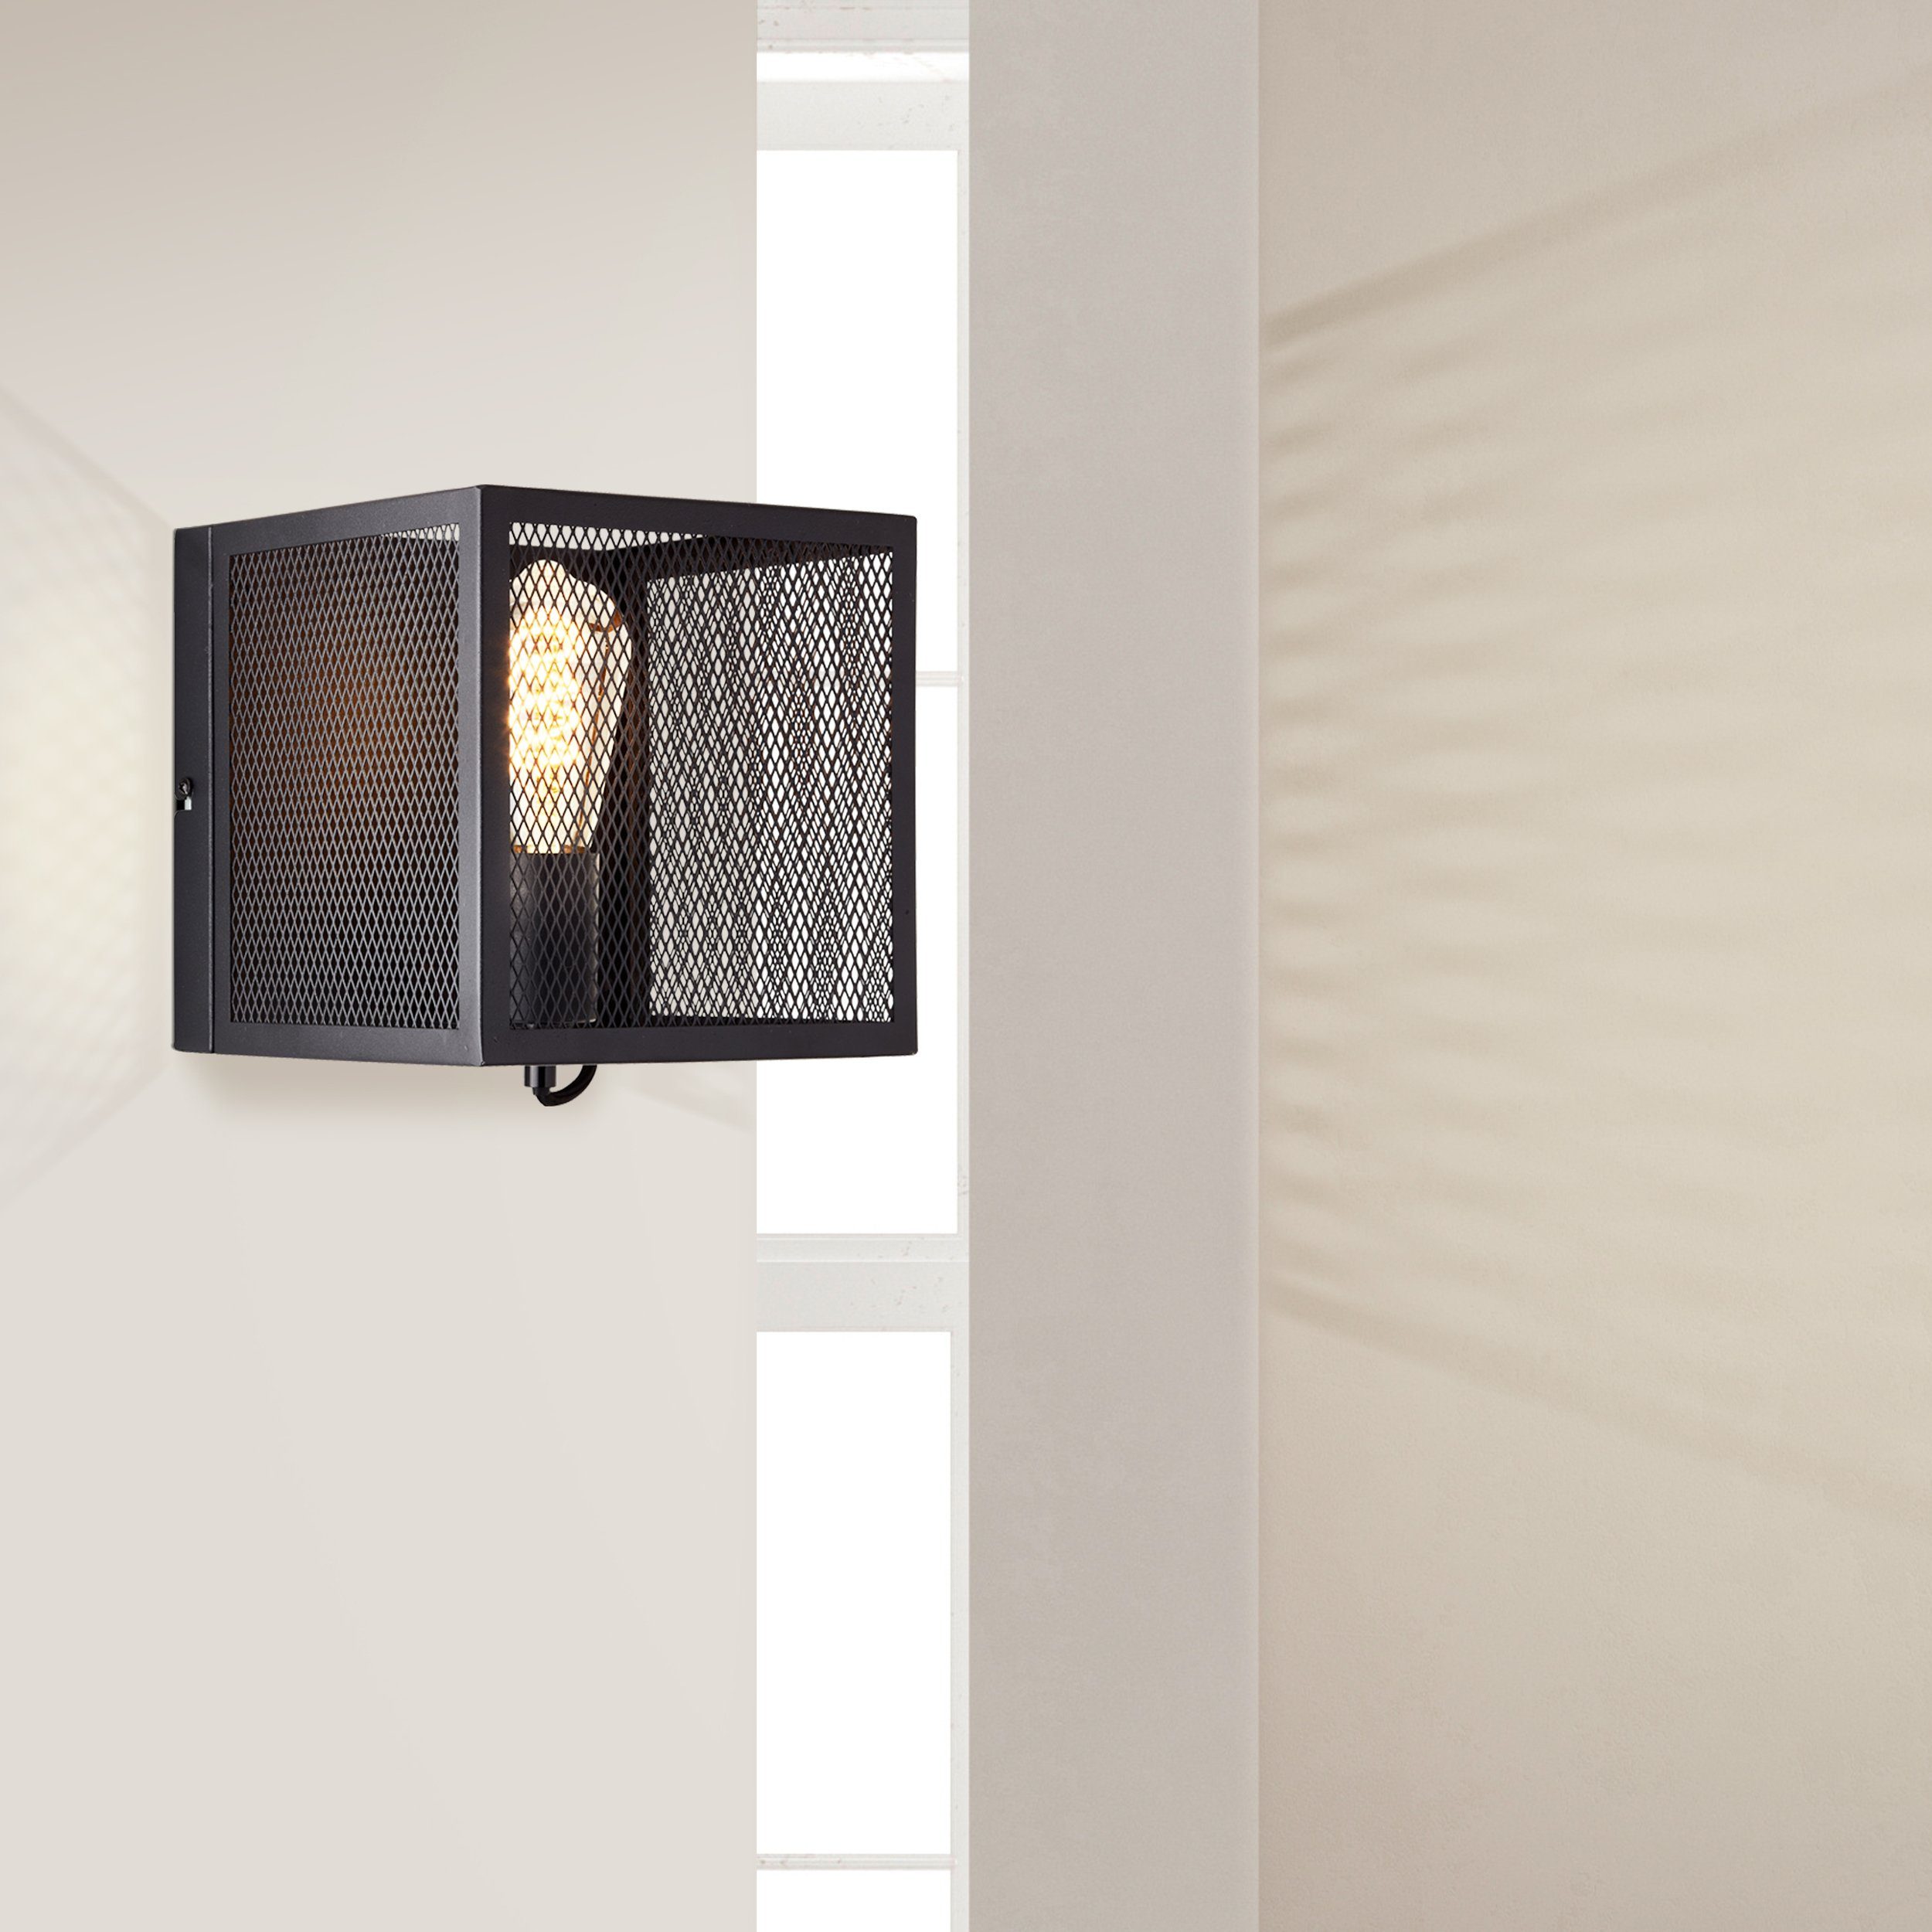 Lightbox Wandleuchte, ohne Leuchtmittel, Wandlampe, 20 x 20 x 20 cm, E27, max. 40 W, Metall, schwarz korund